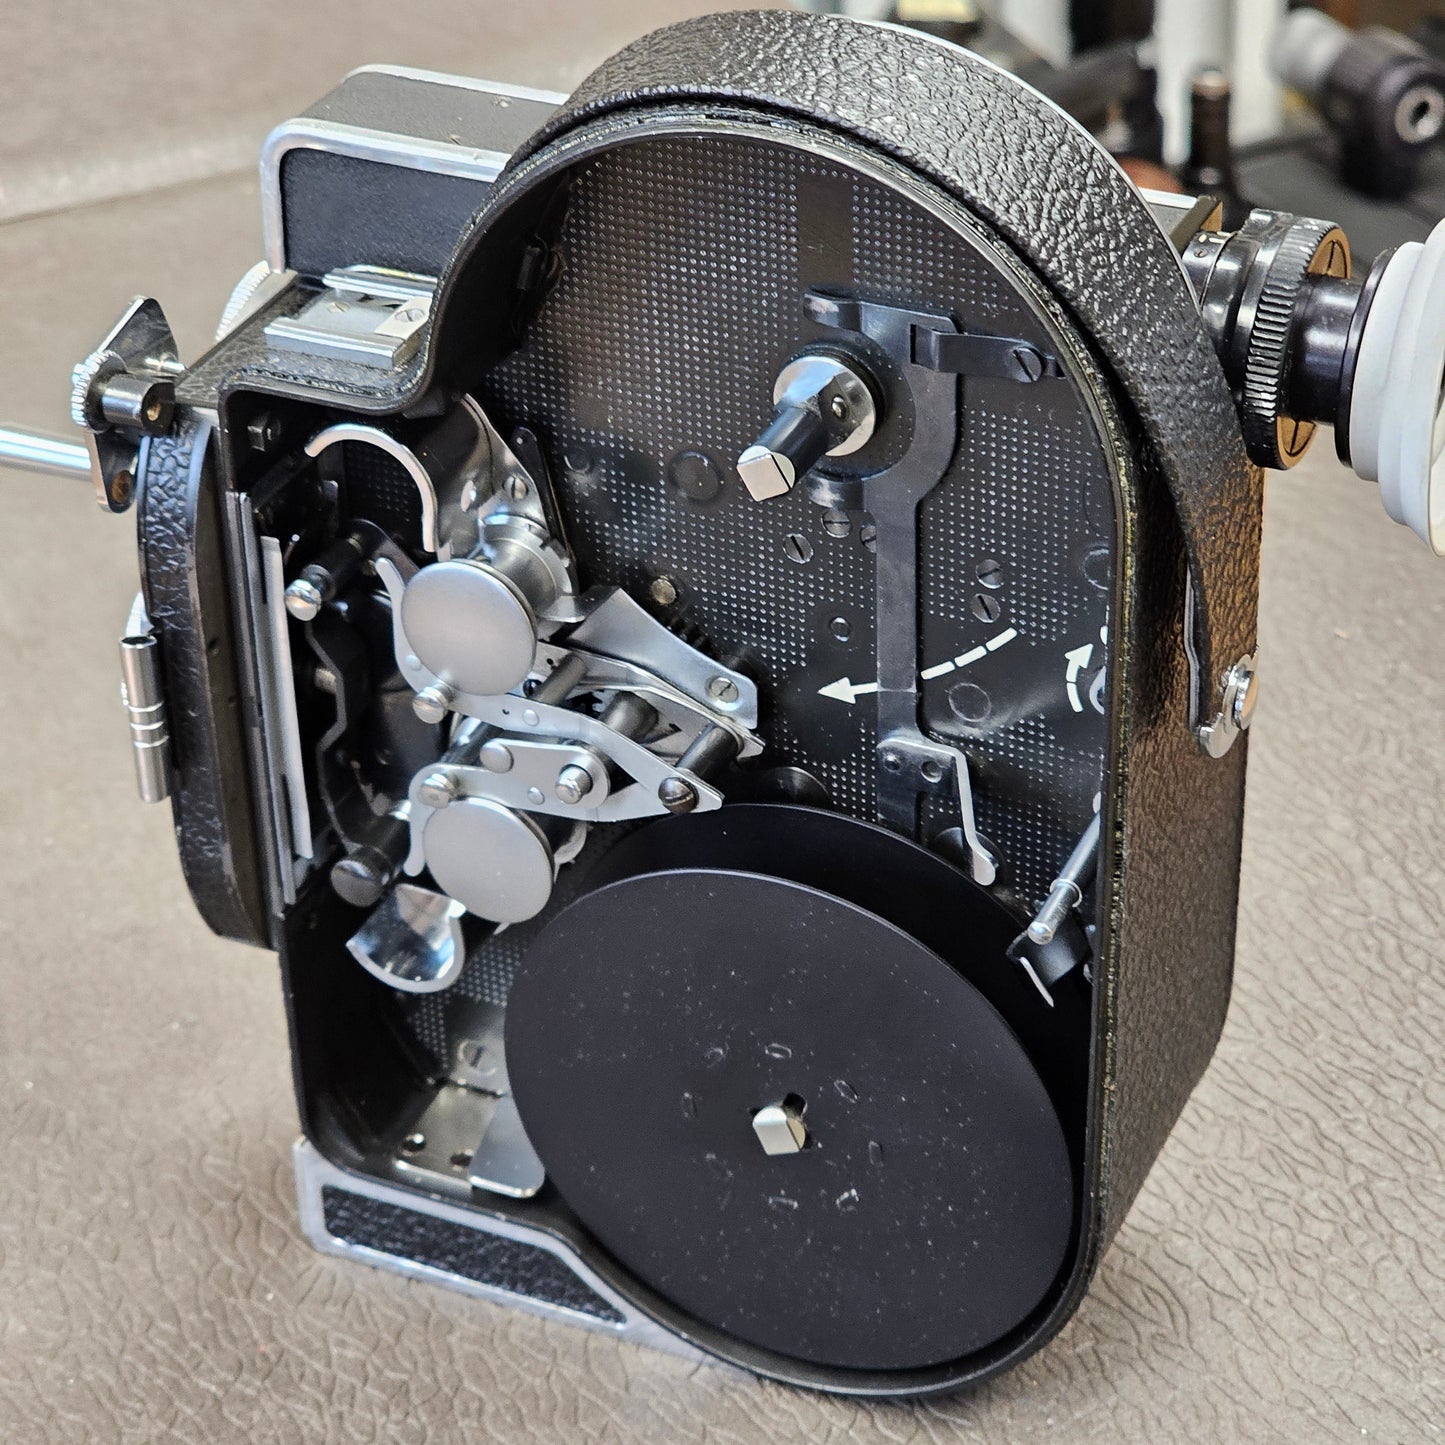 Bolex H16 Rex 4 16mm Camera Body with 10x viewfinder s# 225498